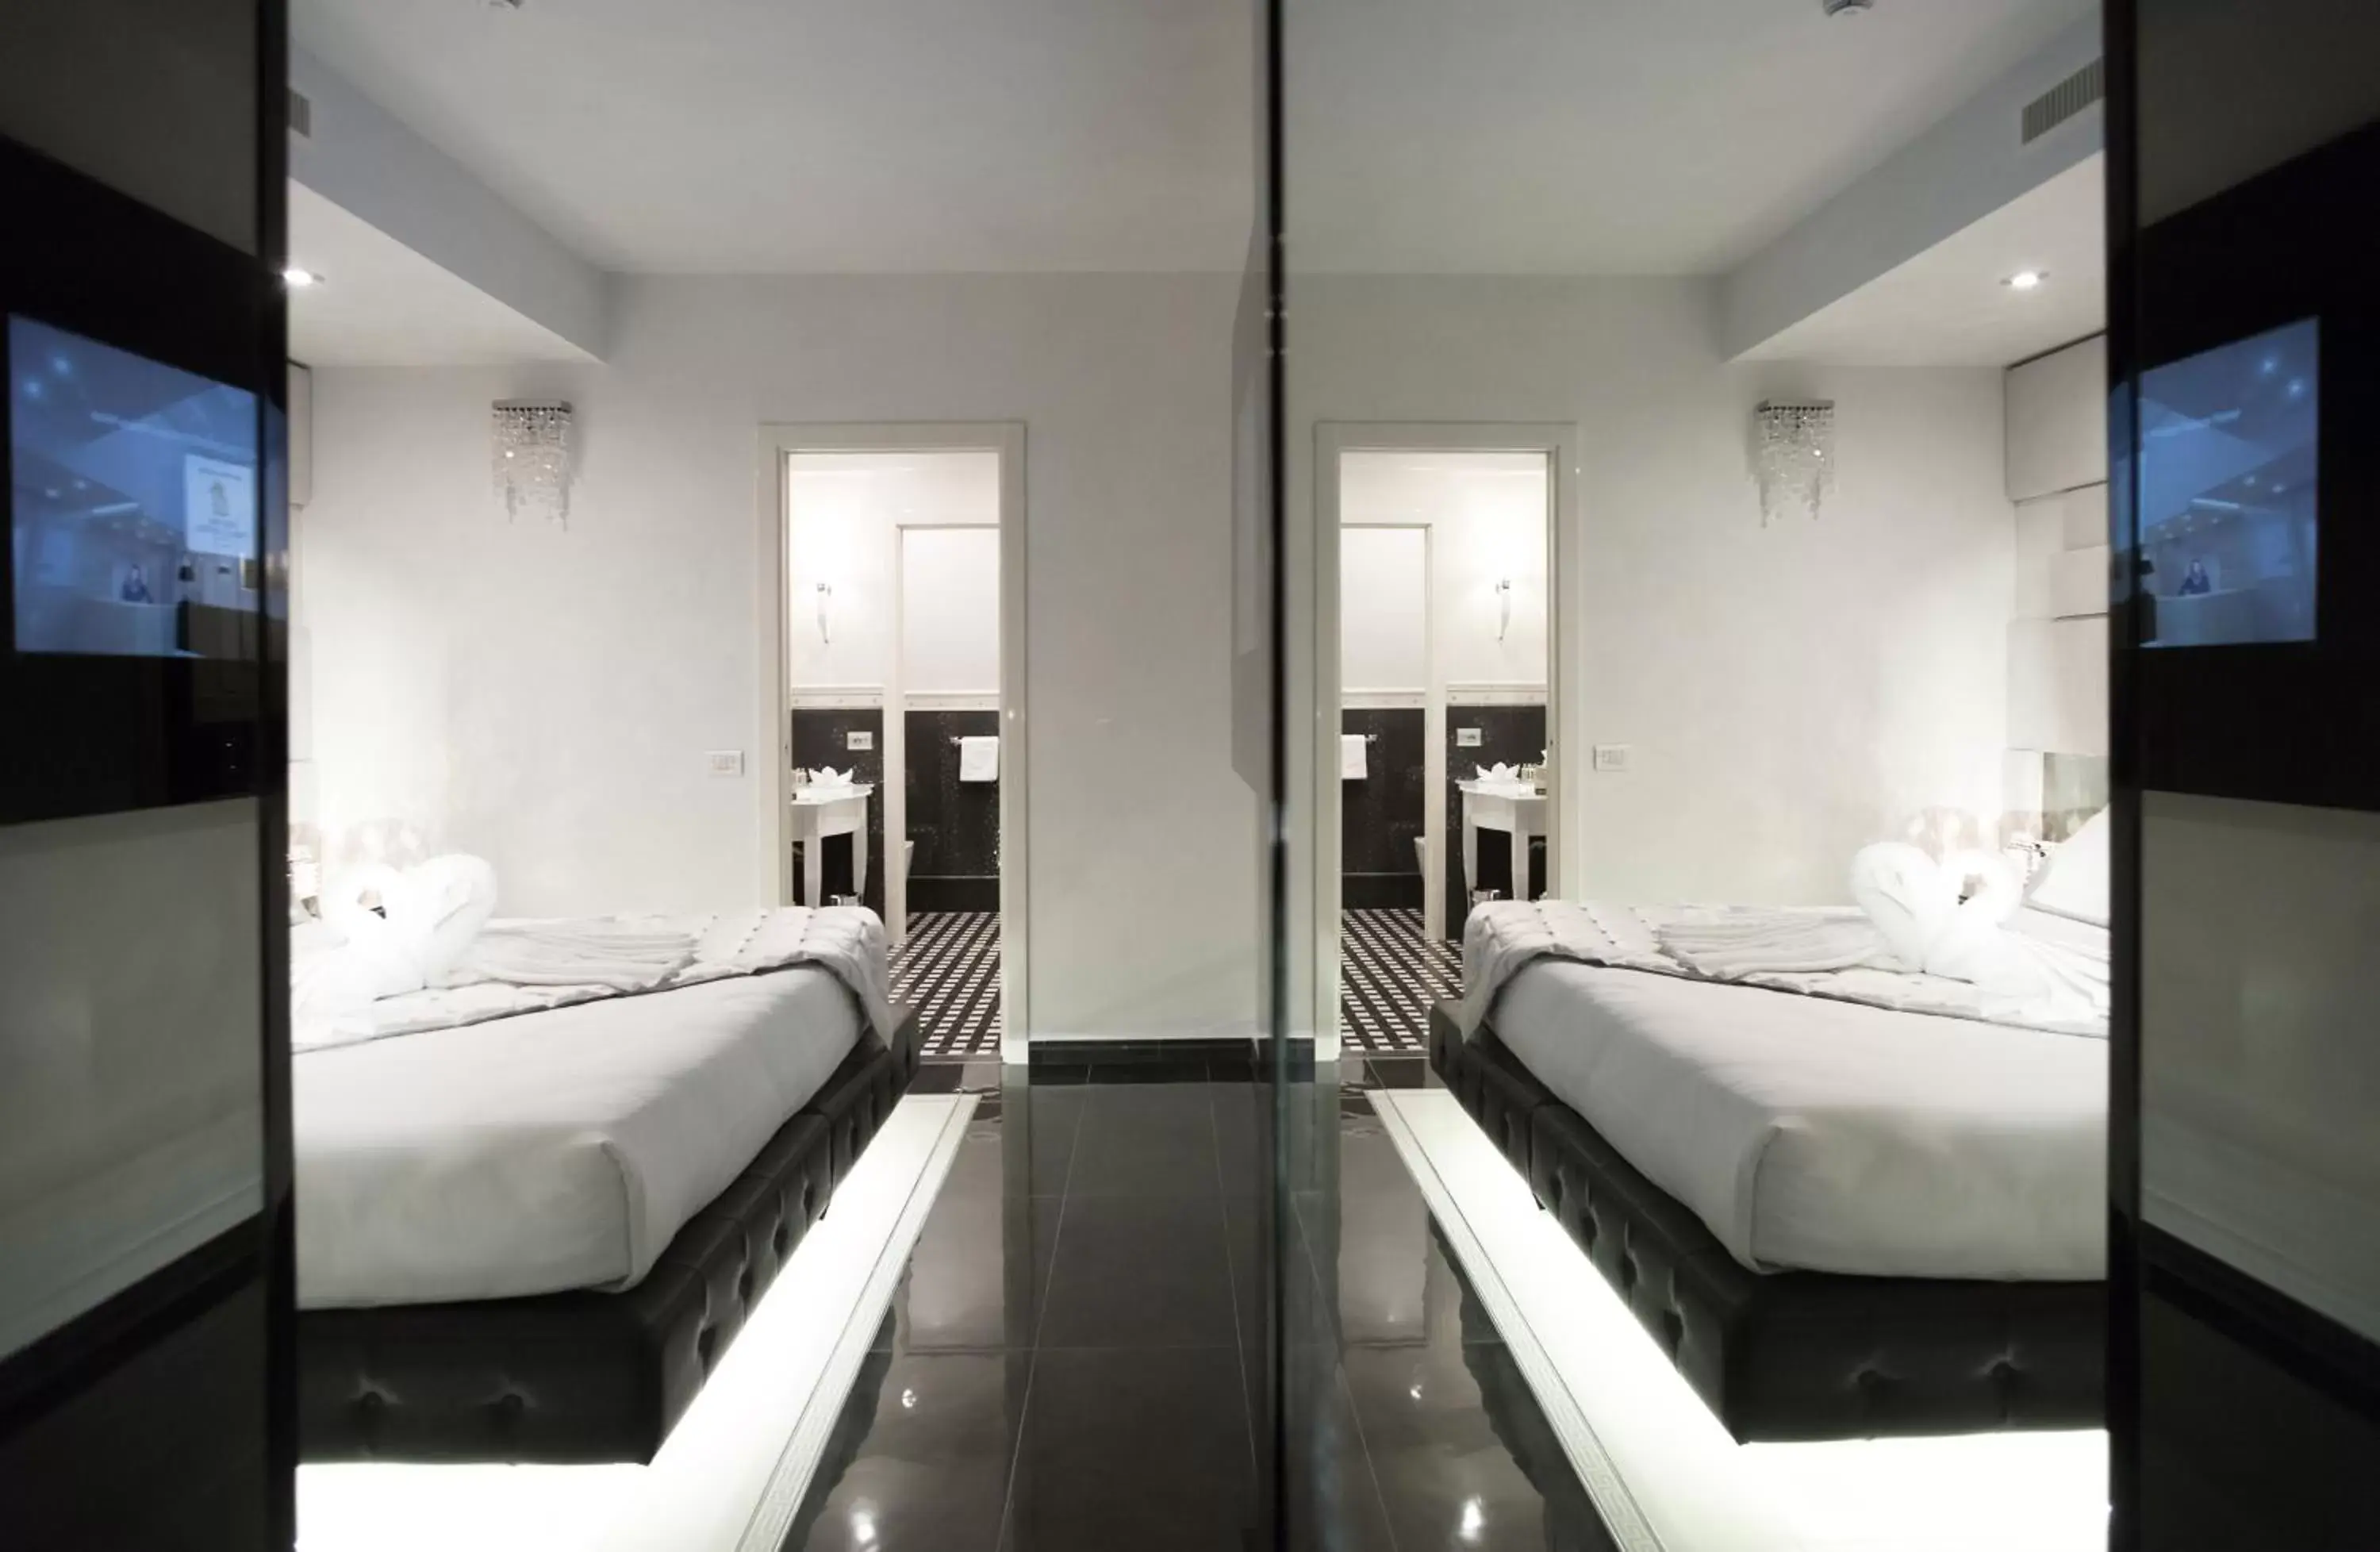 Bedroom, Bed in Best Western Premier Milano Palace Hotel